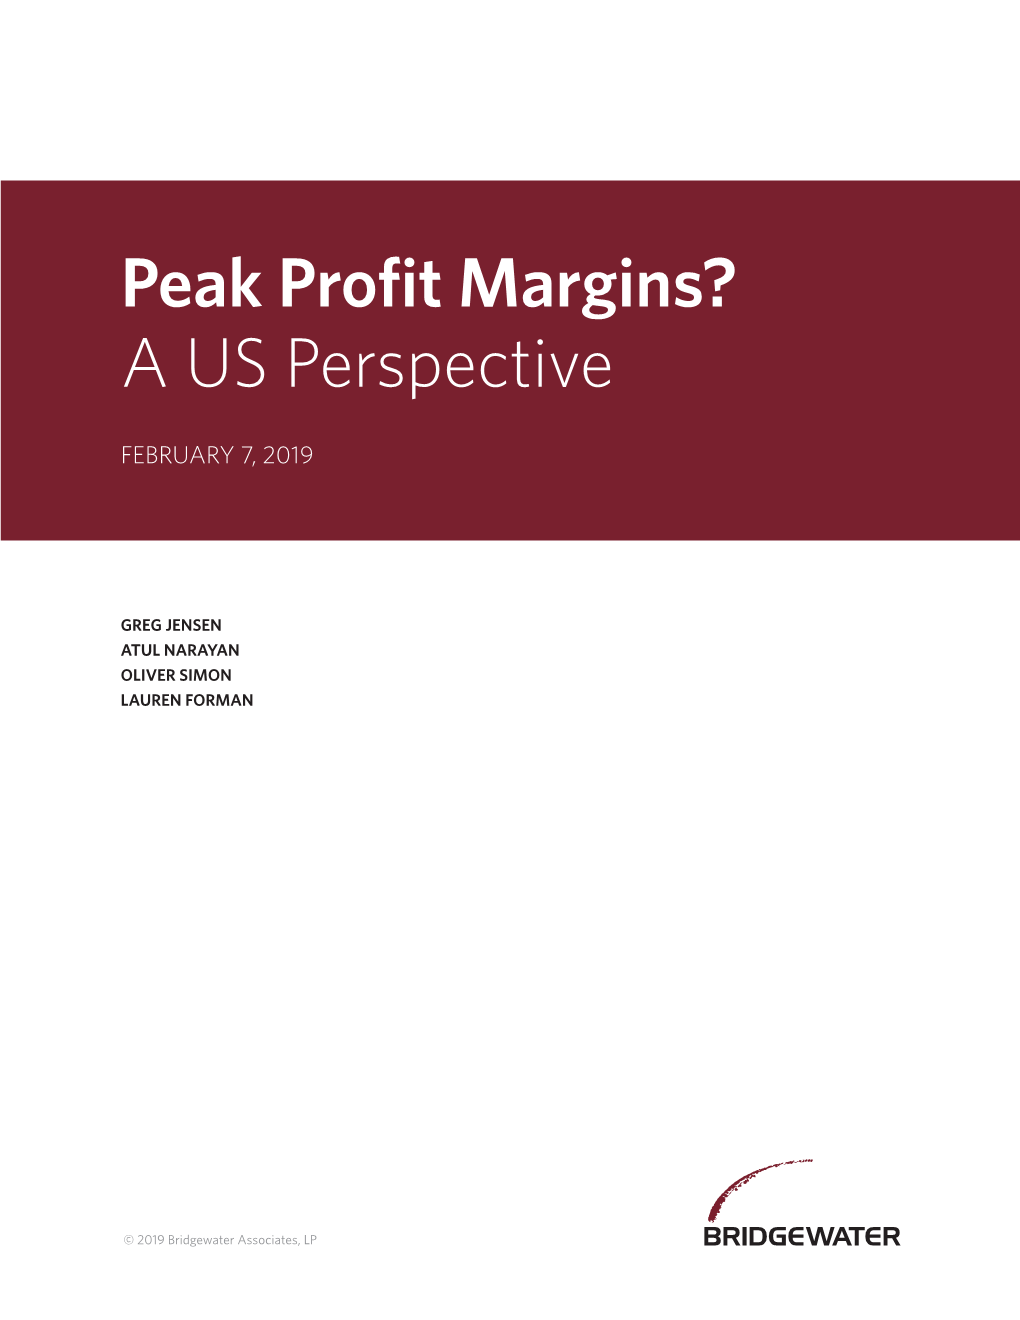 Peak Profit Margins? a US Perspective